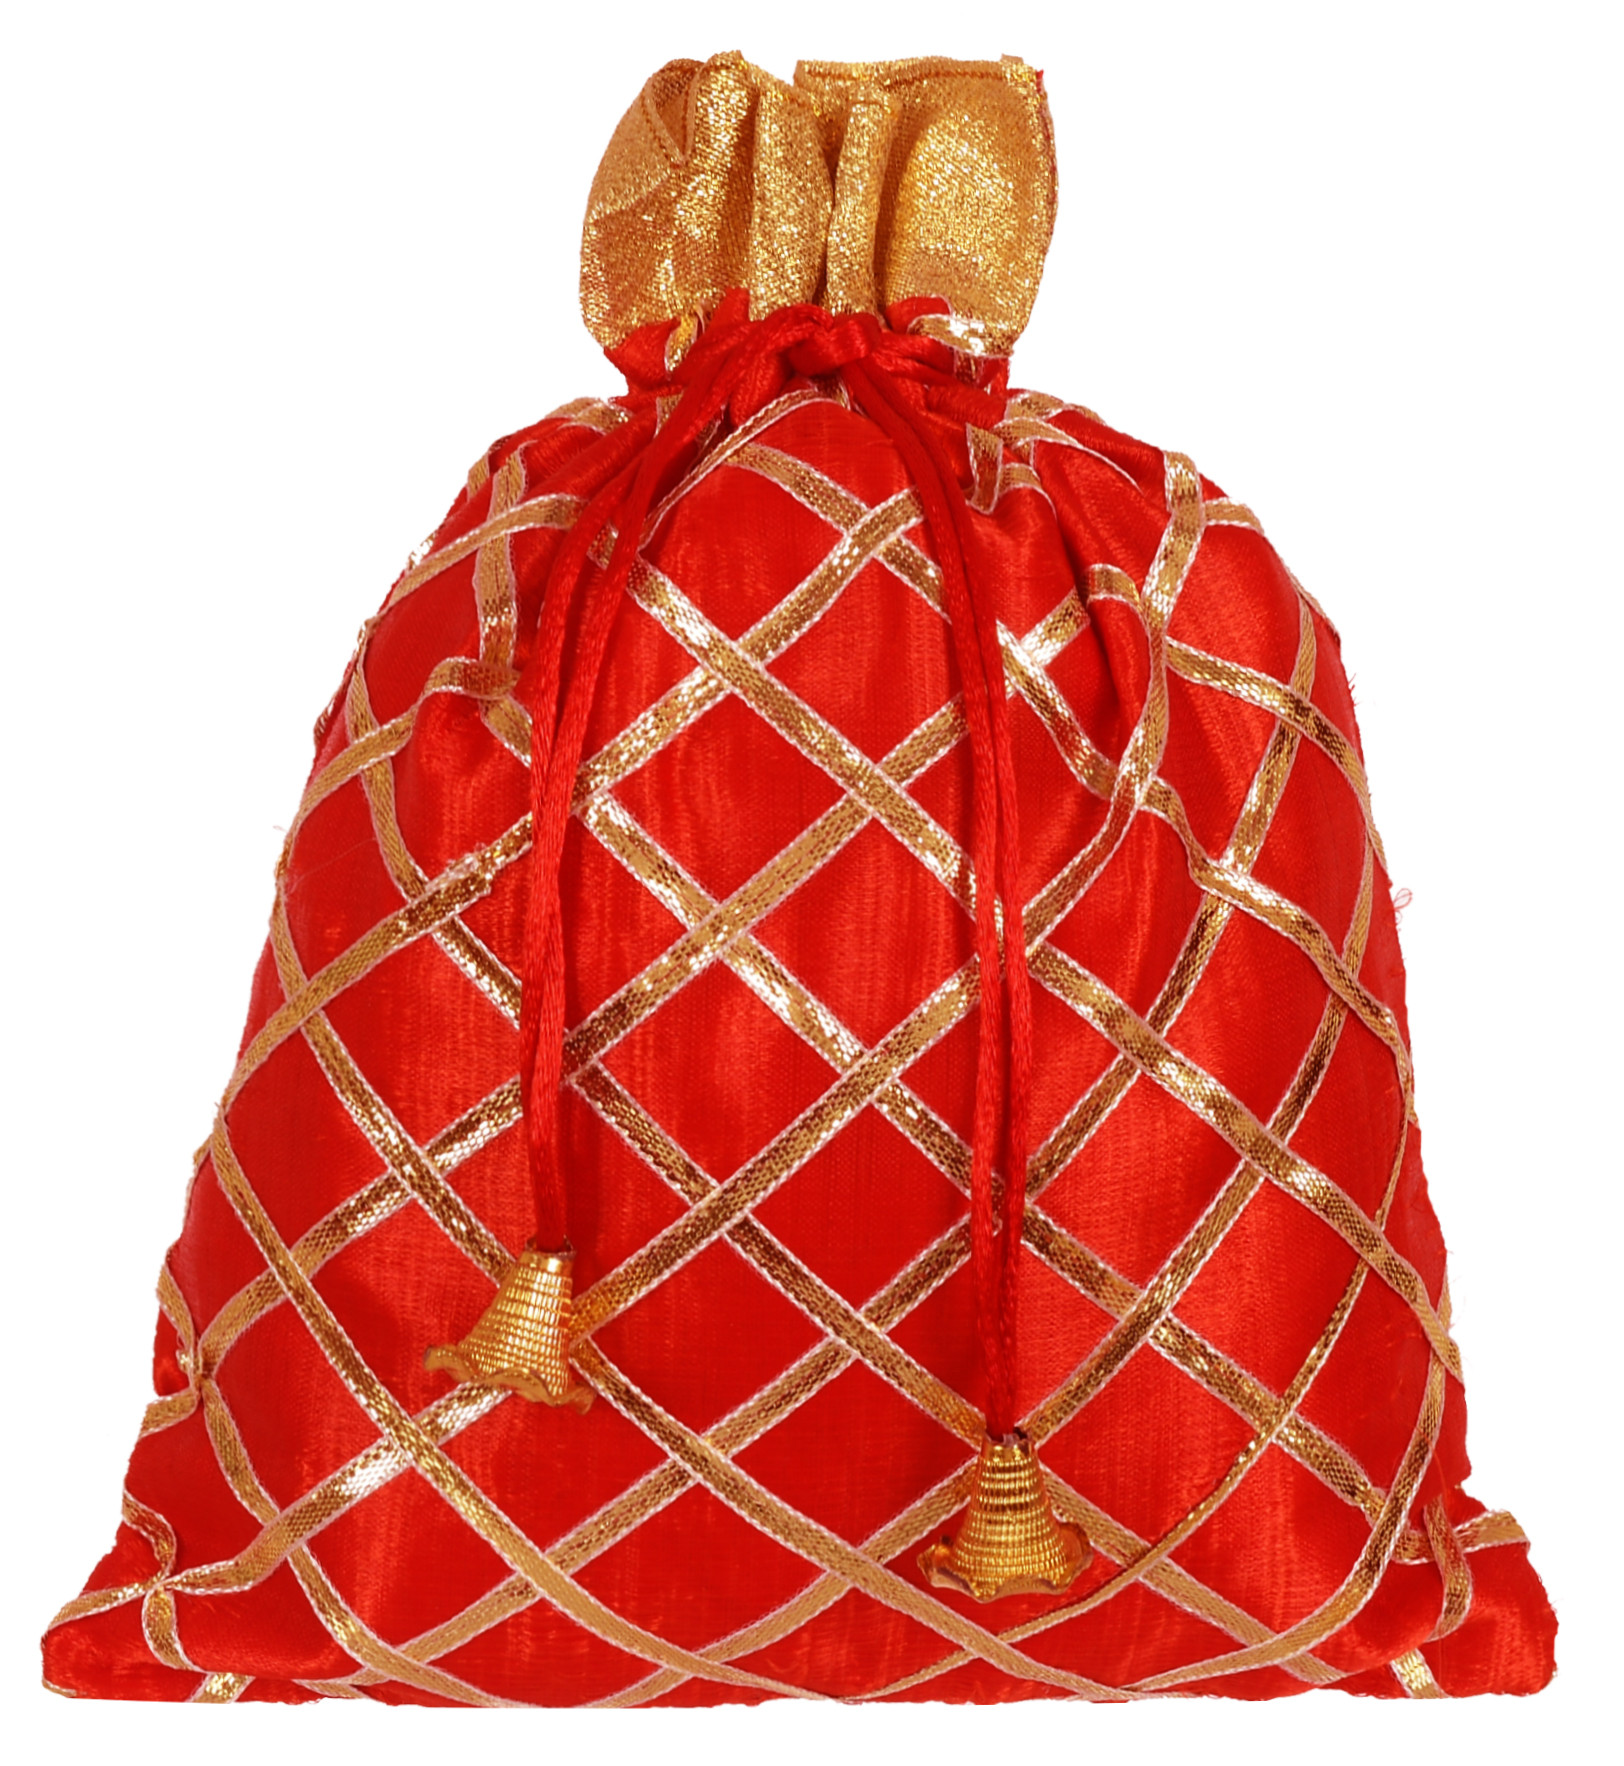 Kuber Industries Drawstring Potli Bag Party Wedding Favor Gift Jewelry Bags-(Red & Orange)